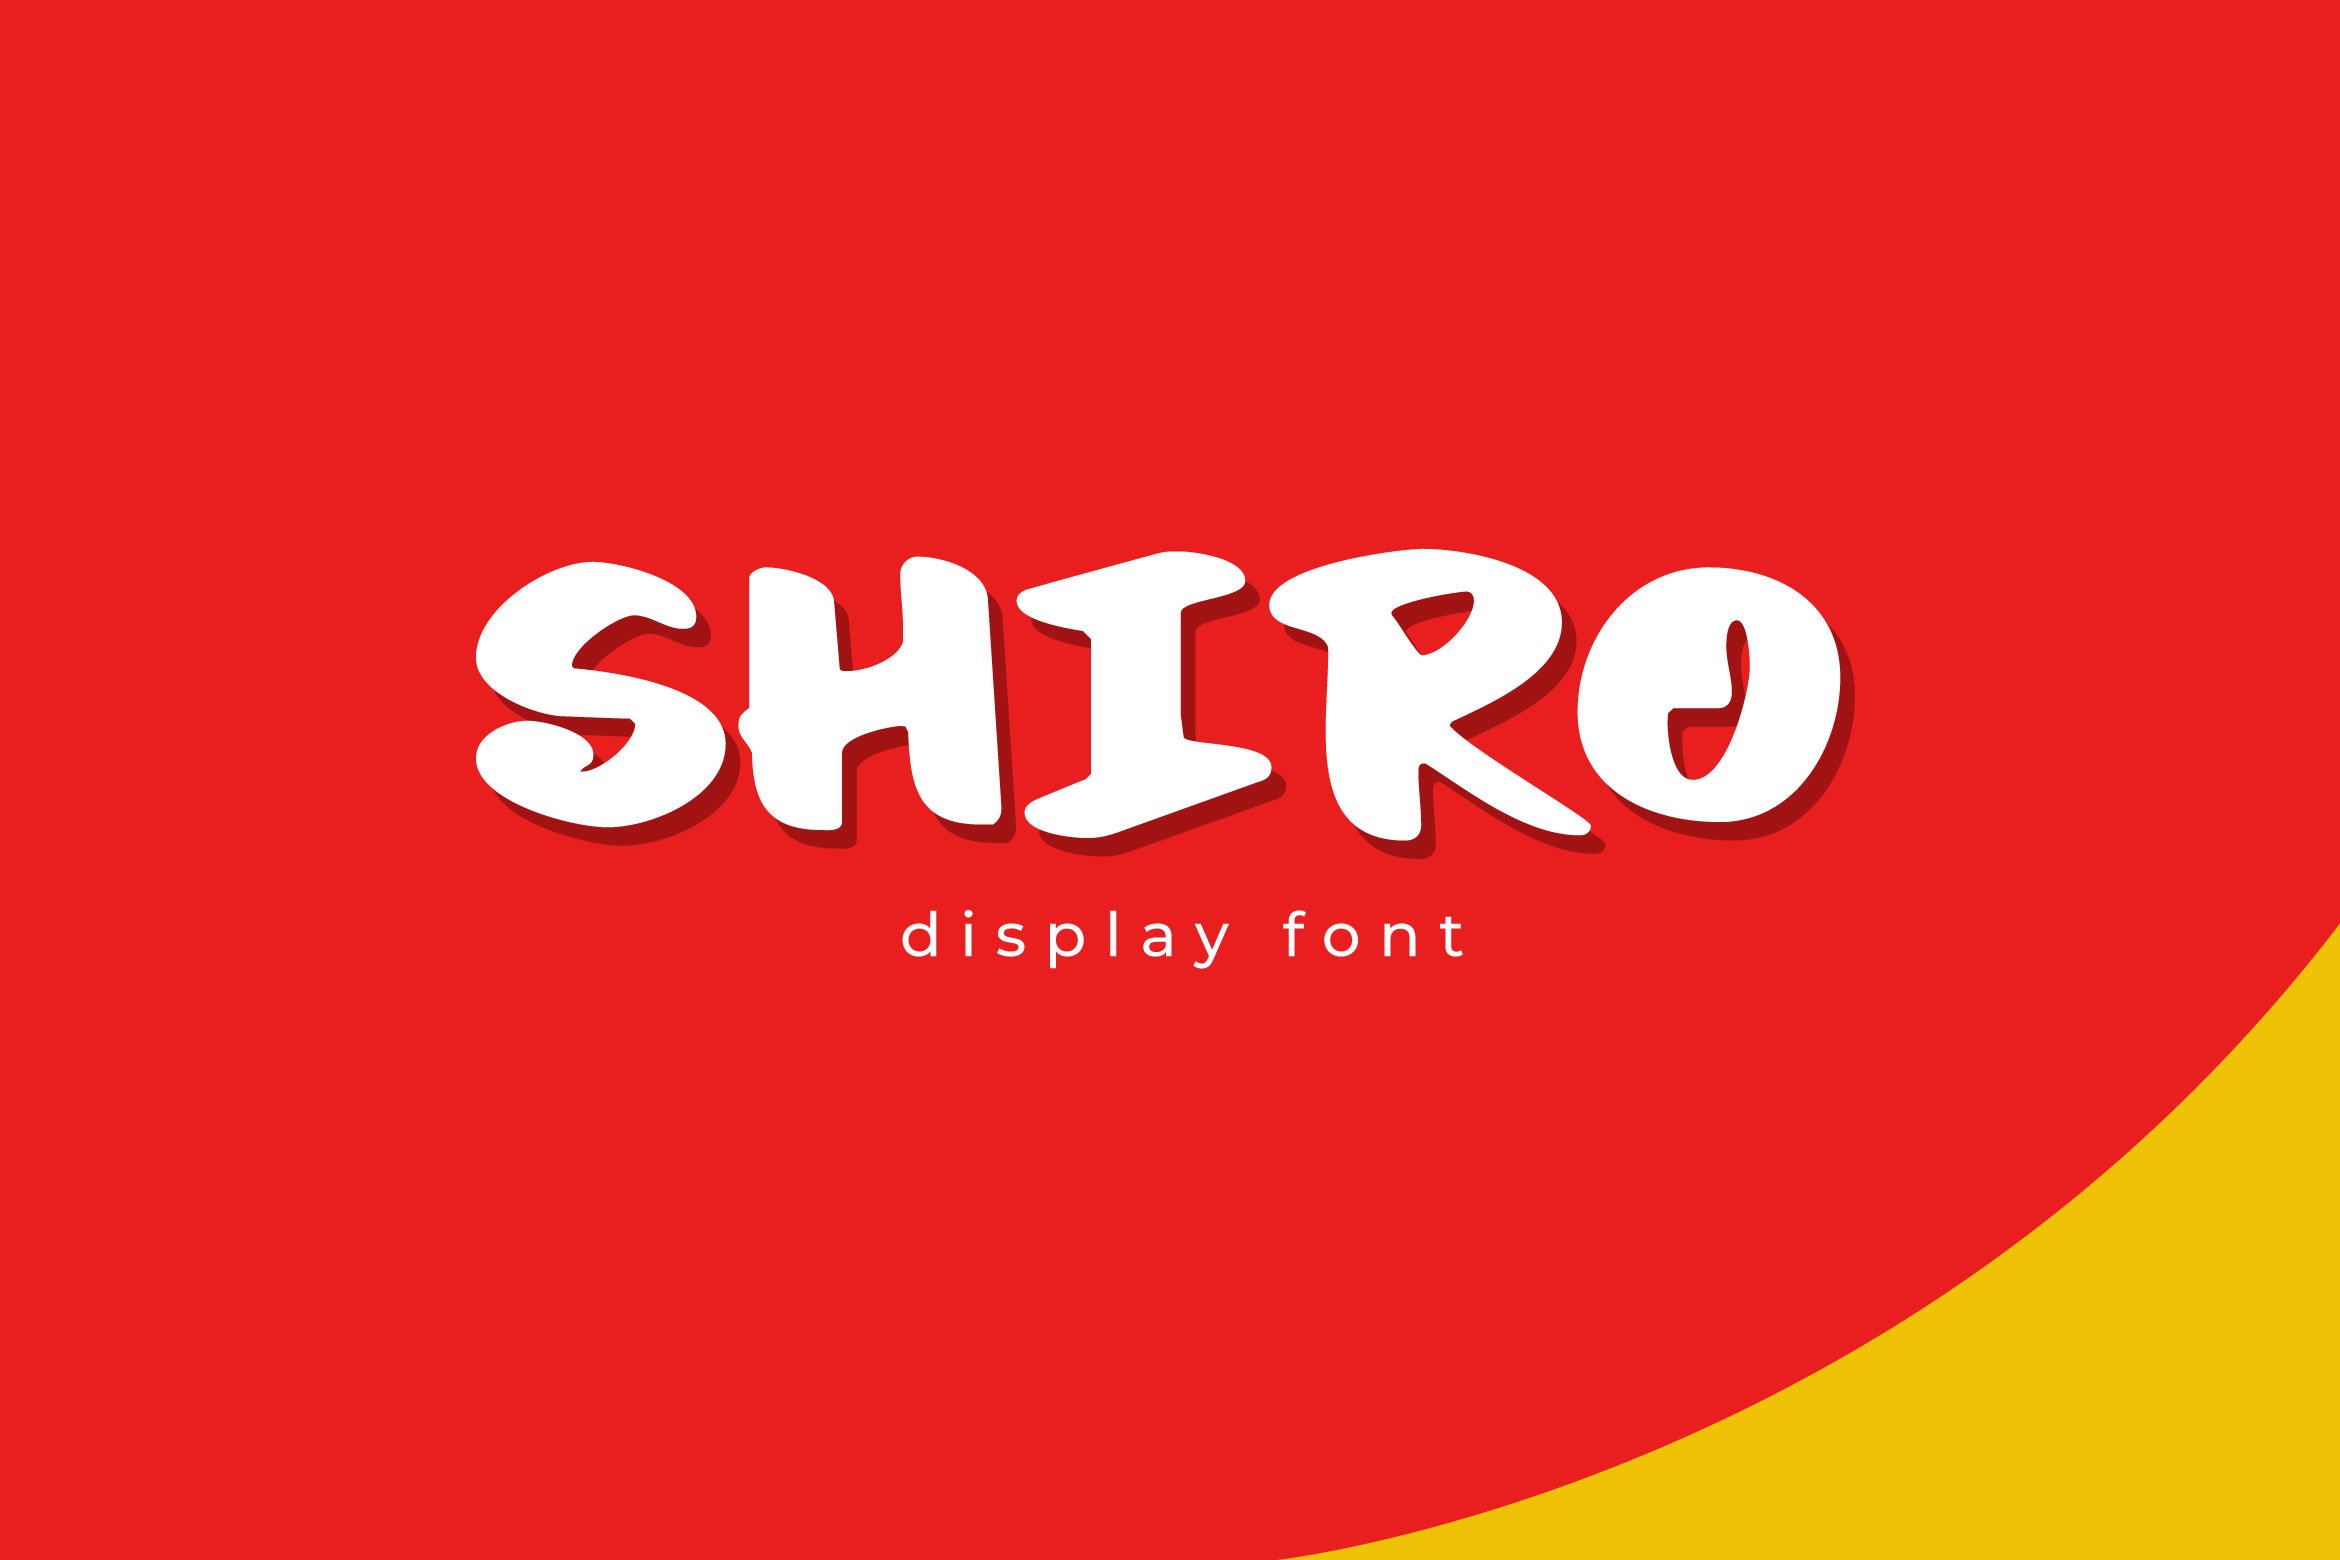 Shiro - Bold Display Font cover image.